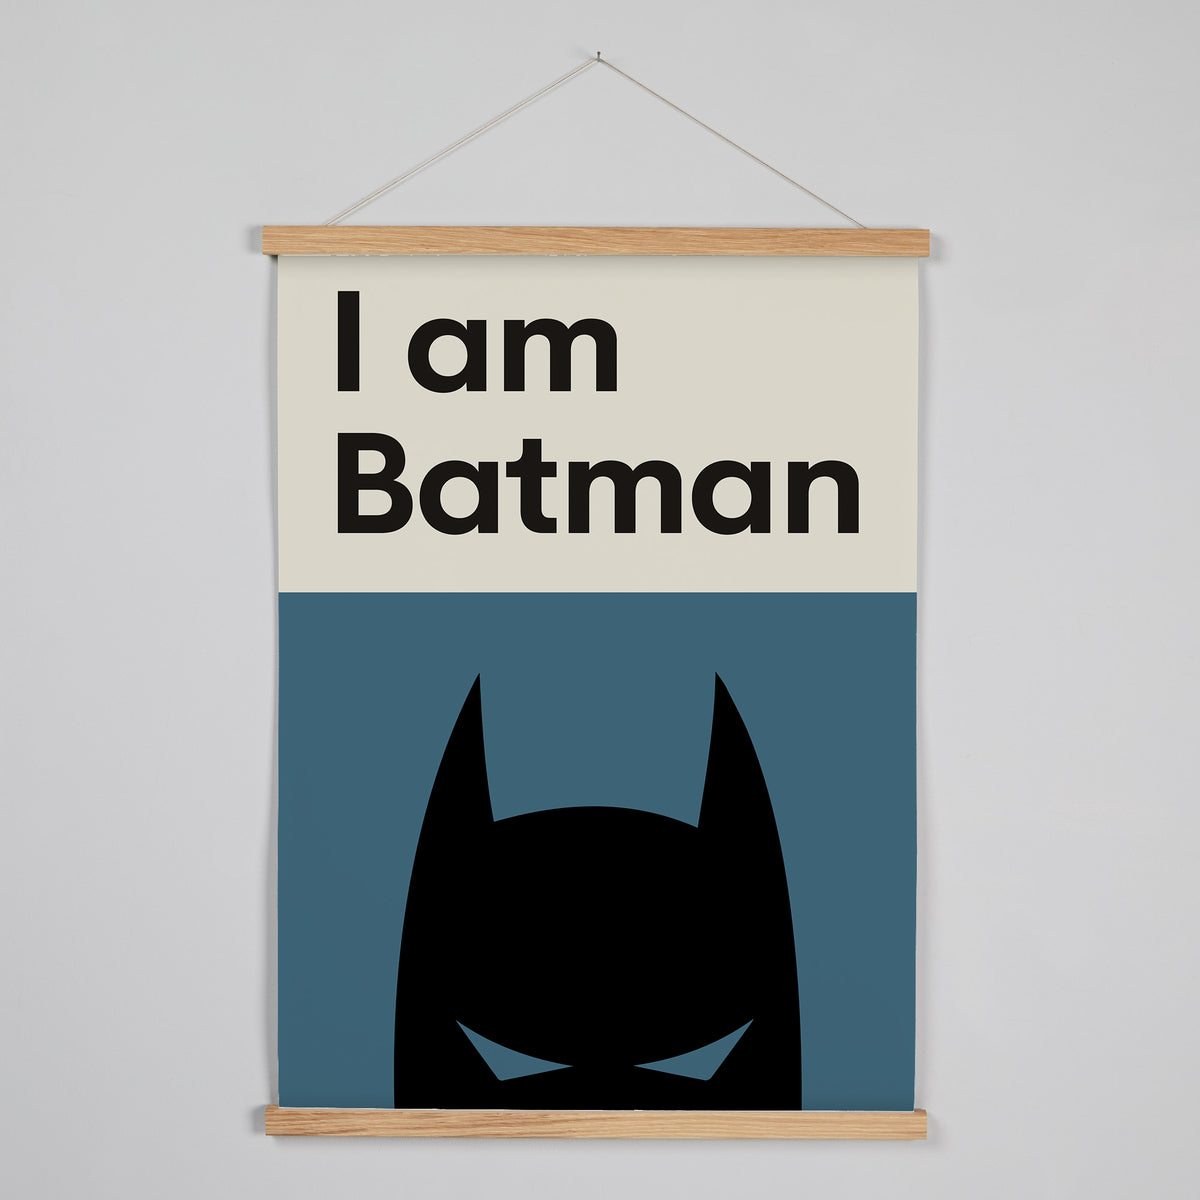 I am Batman – Wonderwallsshop